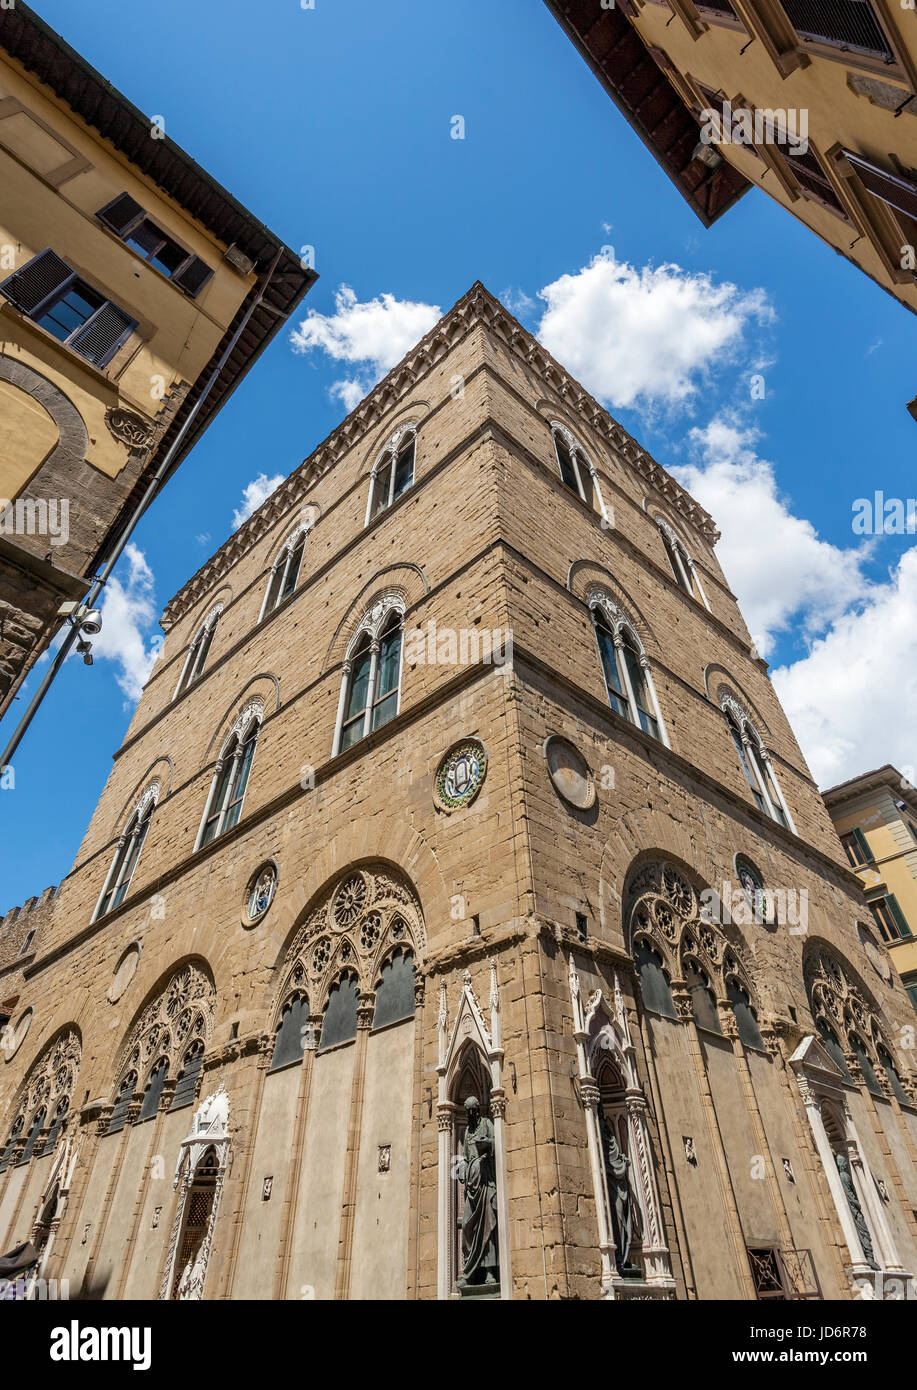 Gothic Church of Orsanmichele - Via dei Calzaiuoli Via Arte della Lana - Florence (Firenze), Tuscany, Italy, Europe Stock Photo